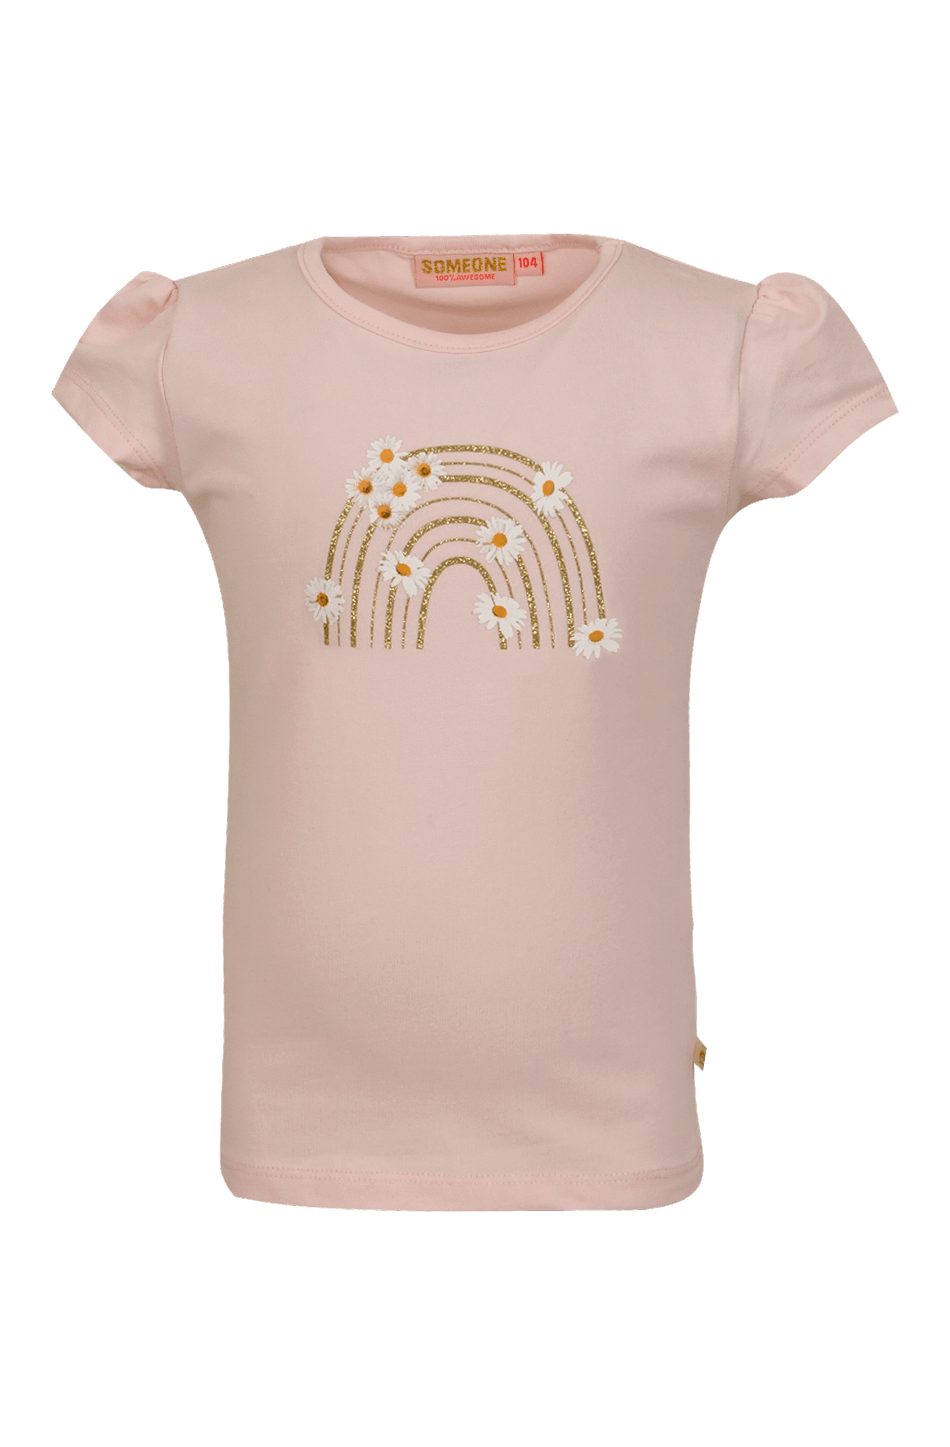 Someone Meisjes t-shirt - Delphine-SG-02-O - Zacht roze